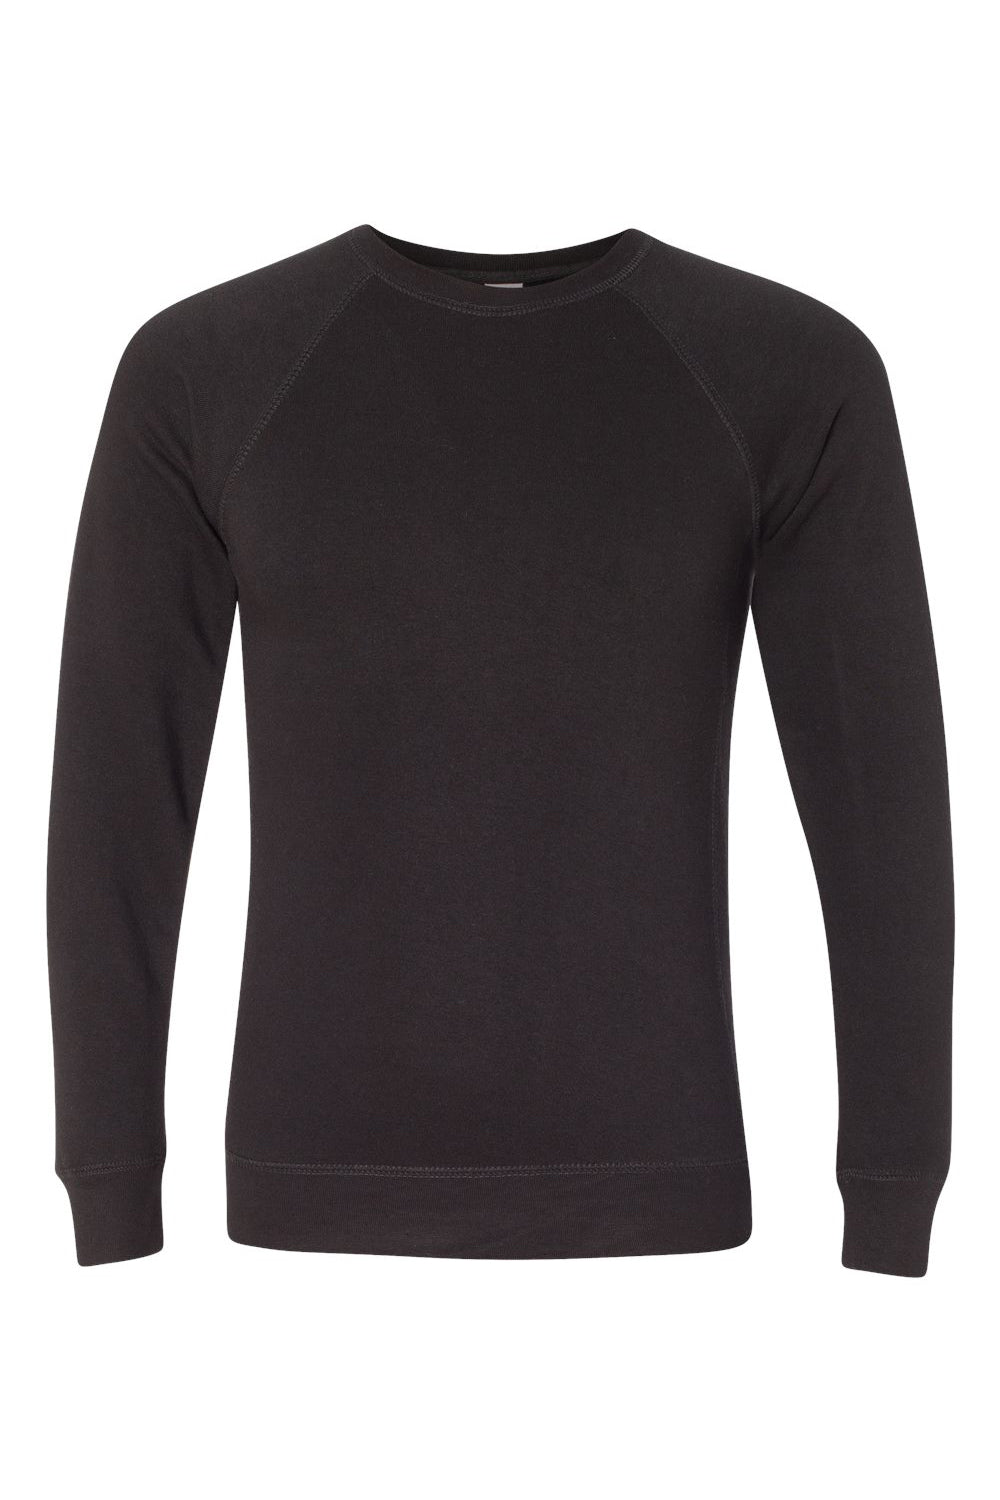 Independent Trading Co. PRM30SBC Mens Special Blend Crewneck Raglan Sweatshirt Black Flat Front